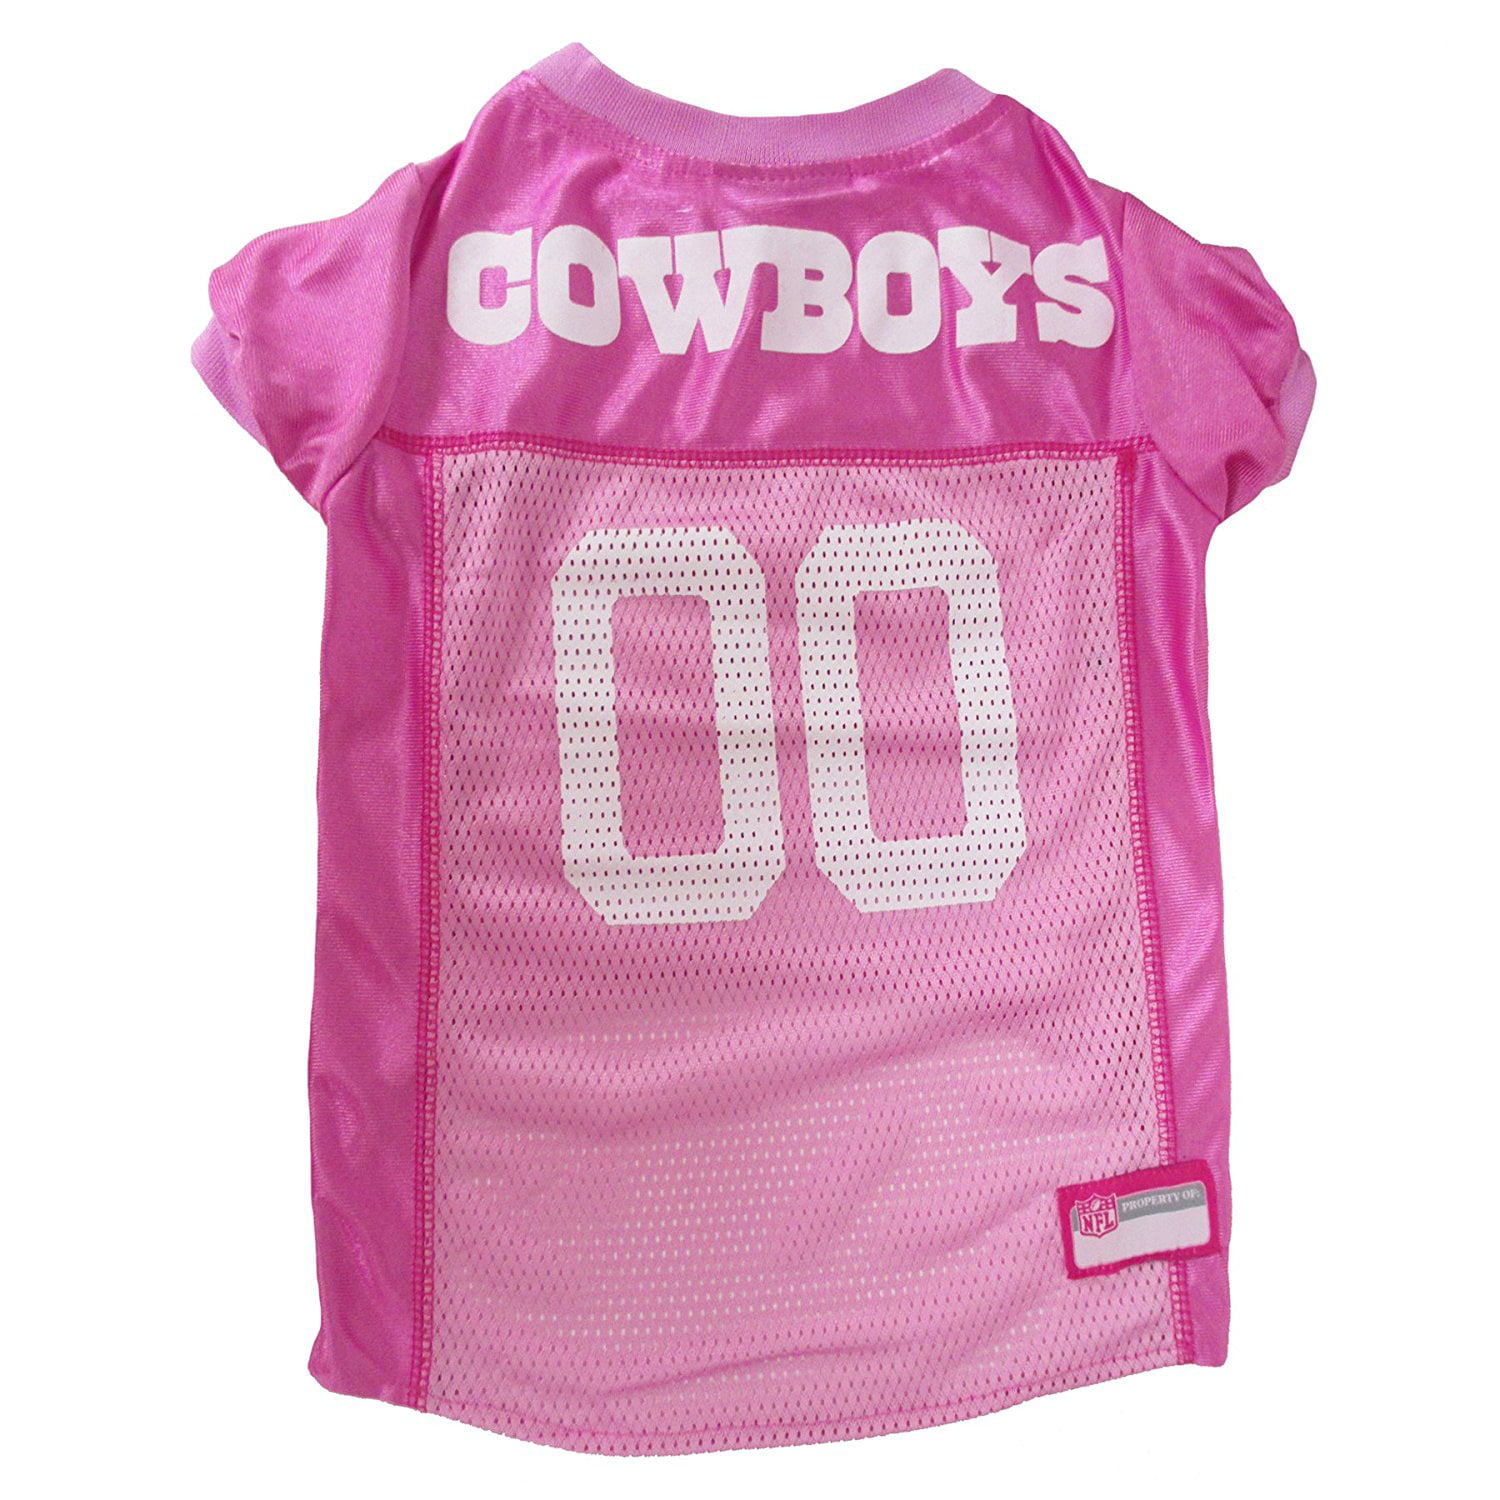 girls pink dallas cowboys jersey